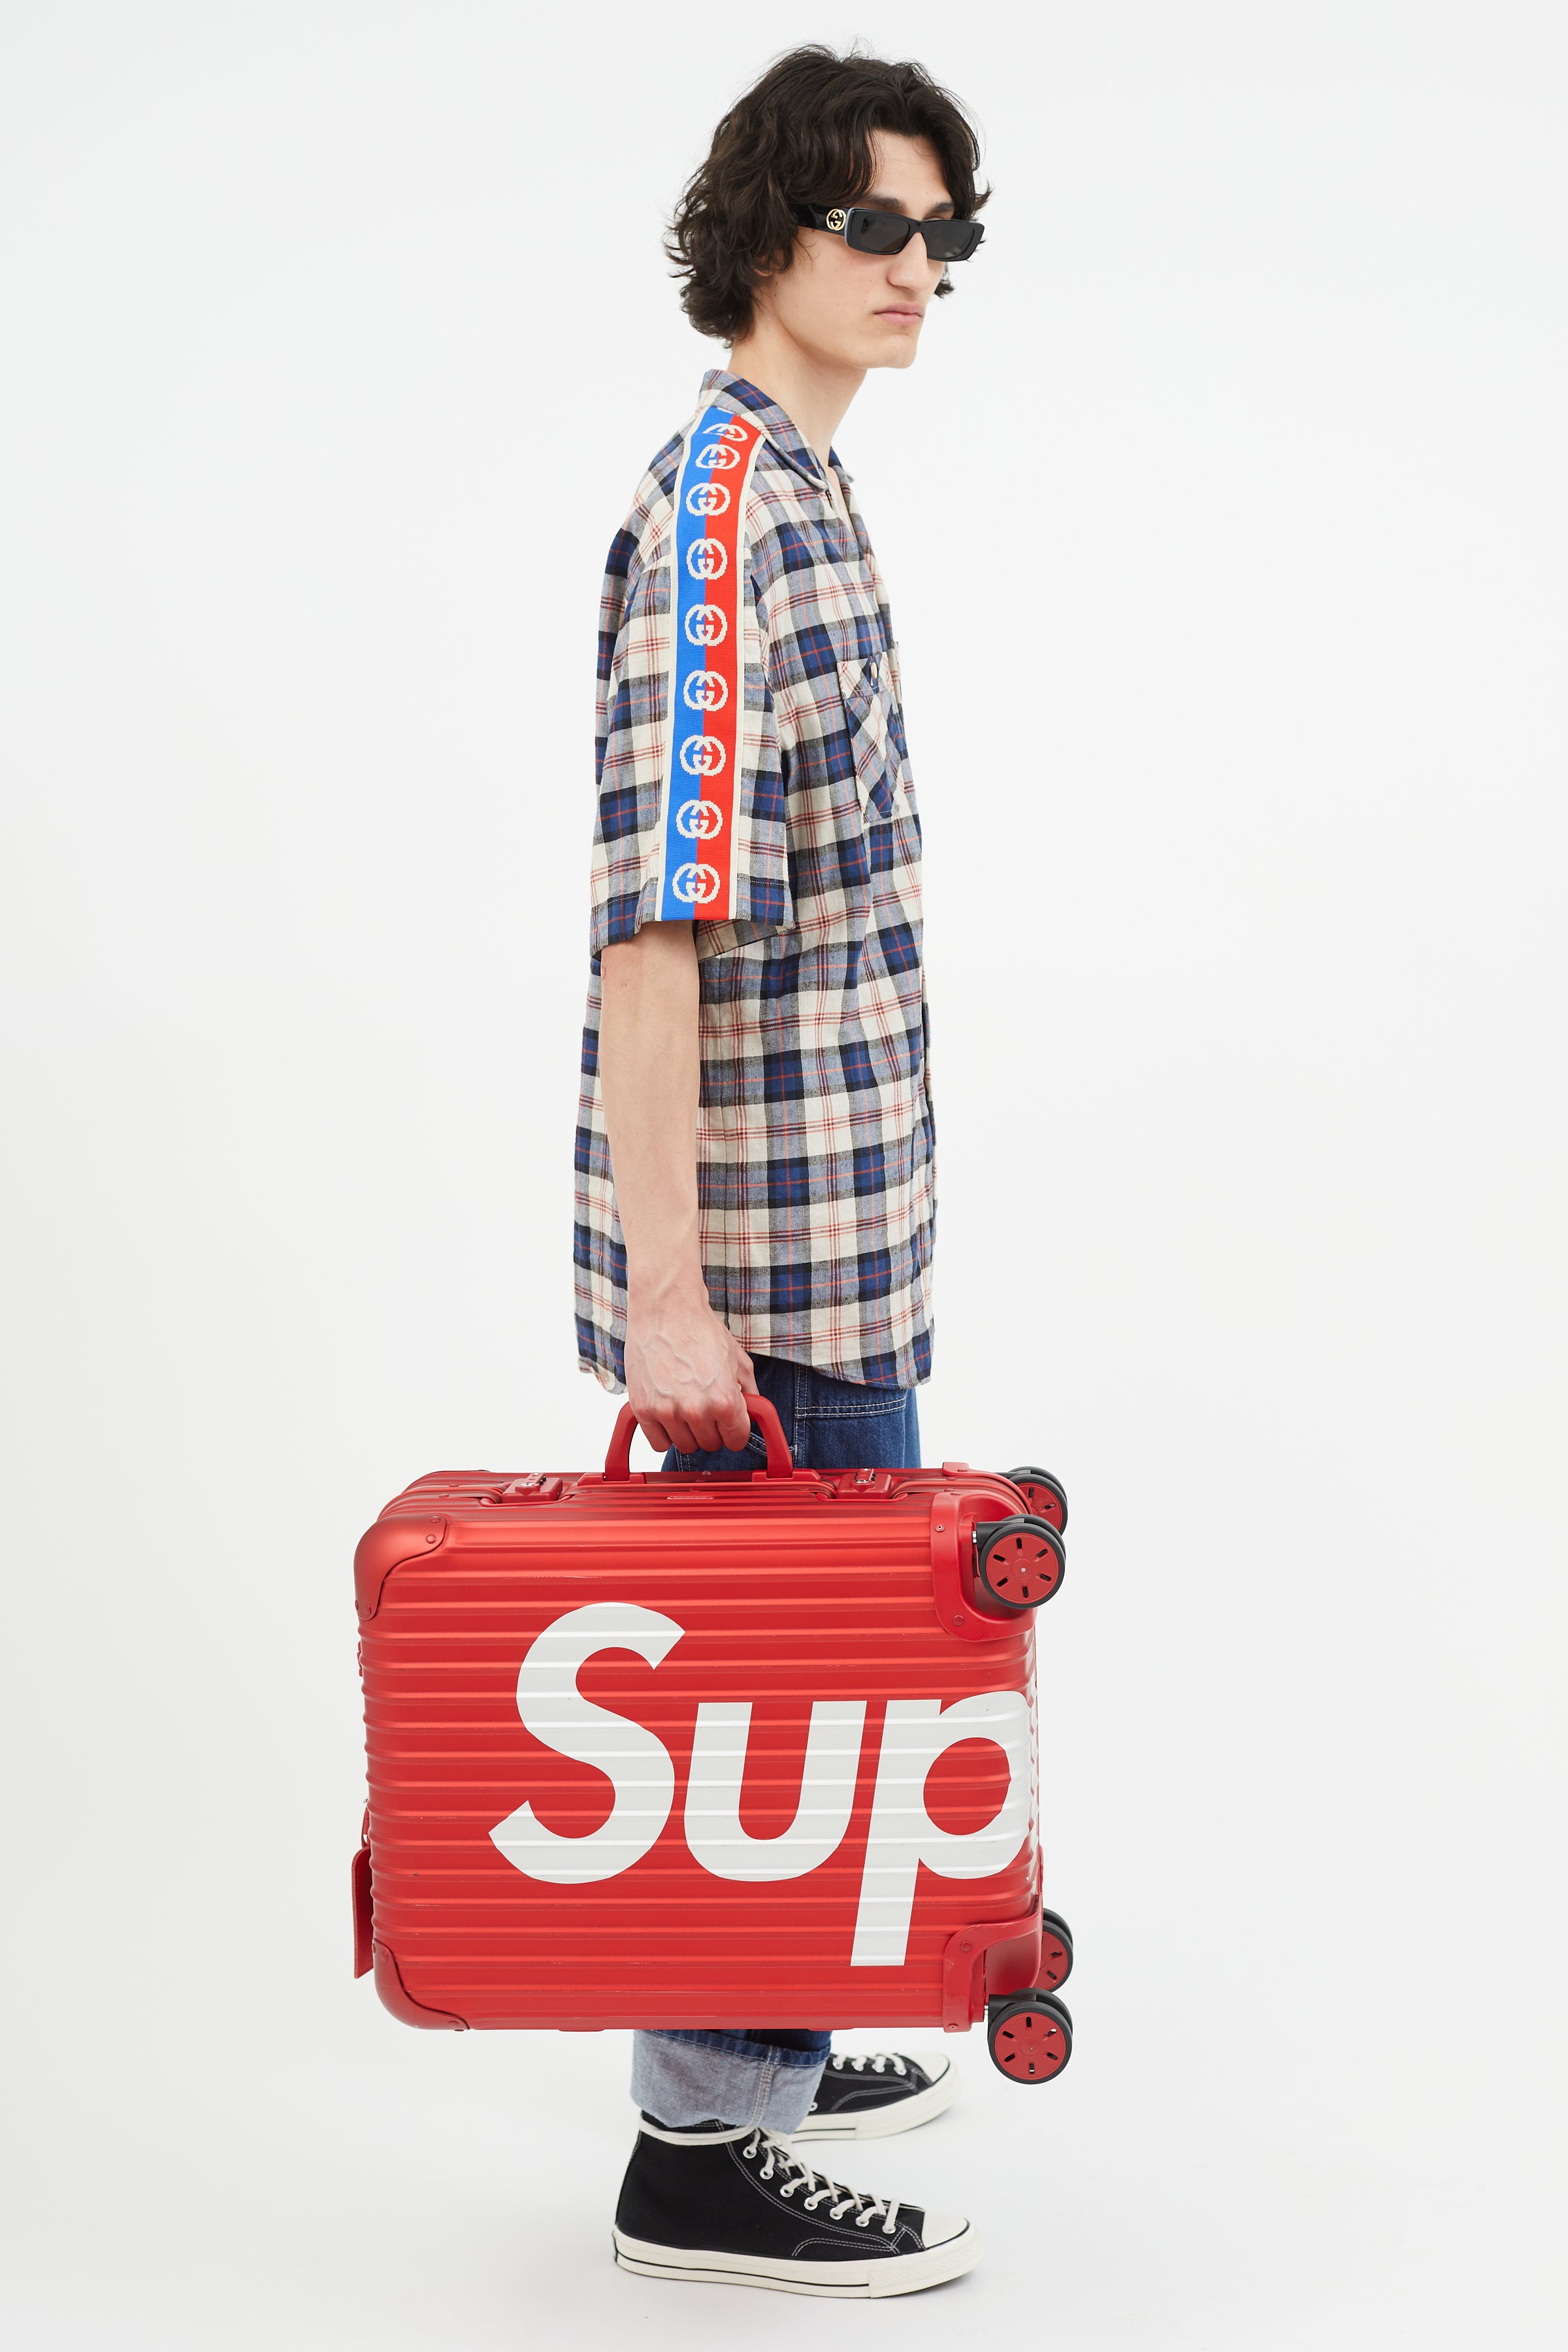 Supreme X Rimowa Luggage 45 L